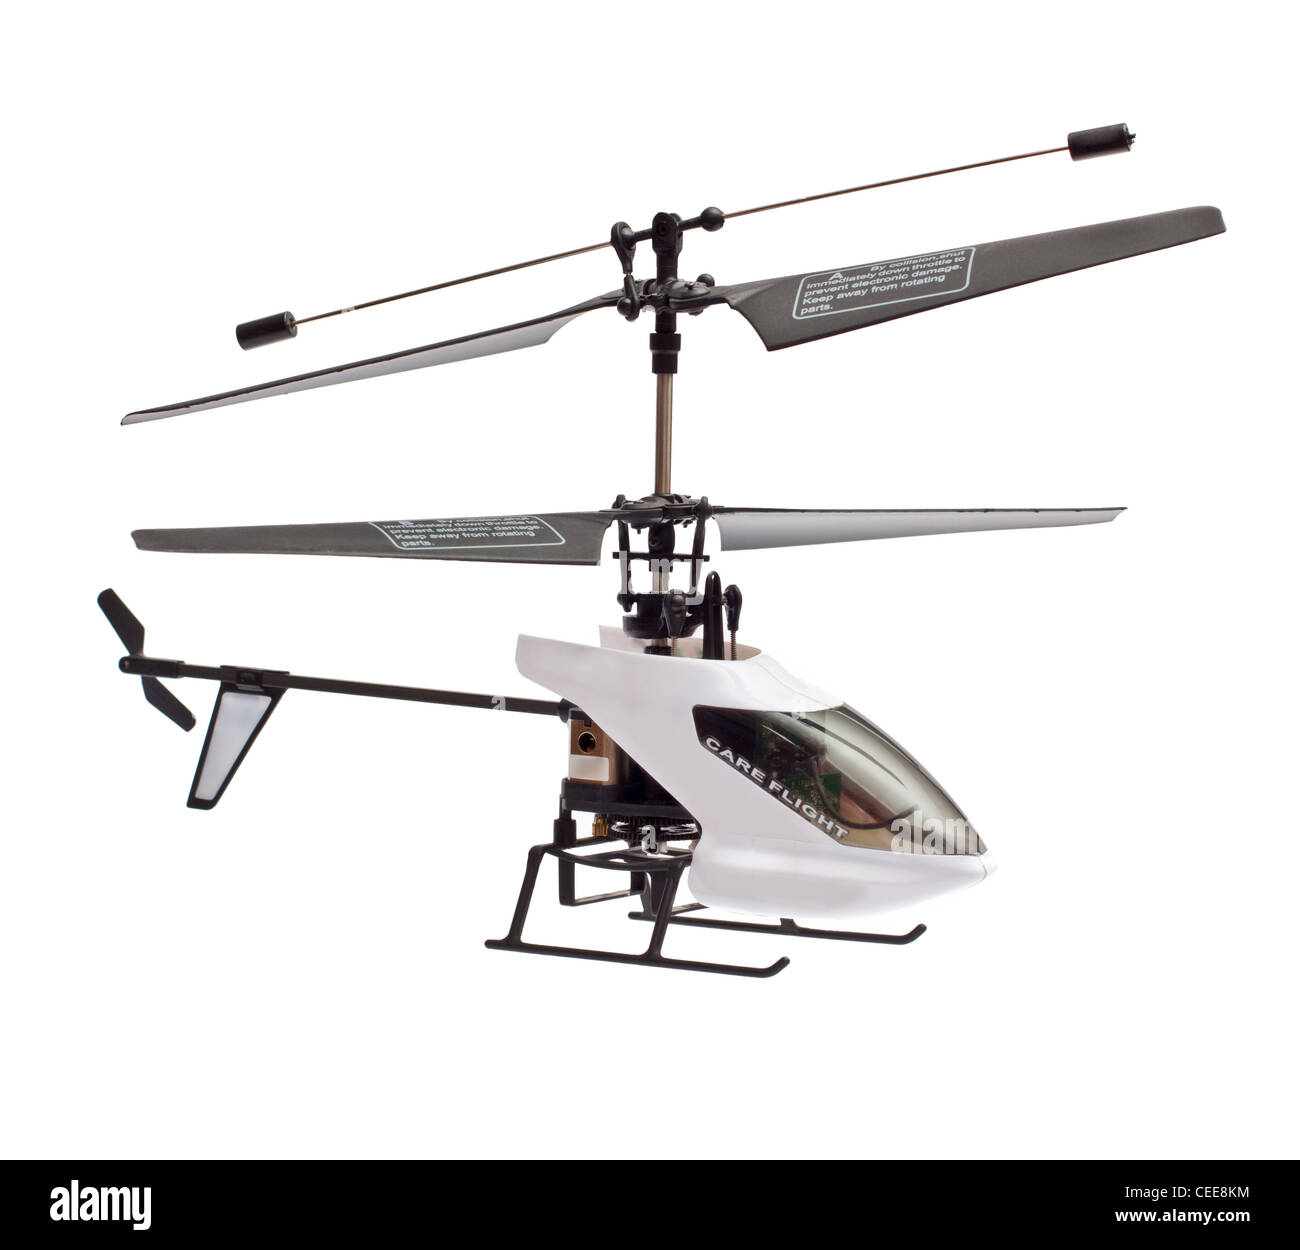 Modelo de helicóptero controlado por radio aislado sobre un fondo blanco. Foto de stock